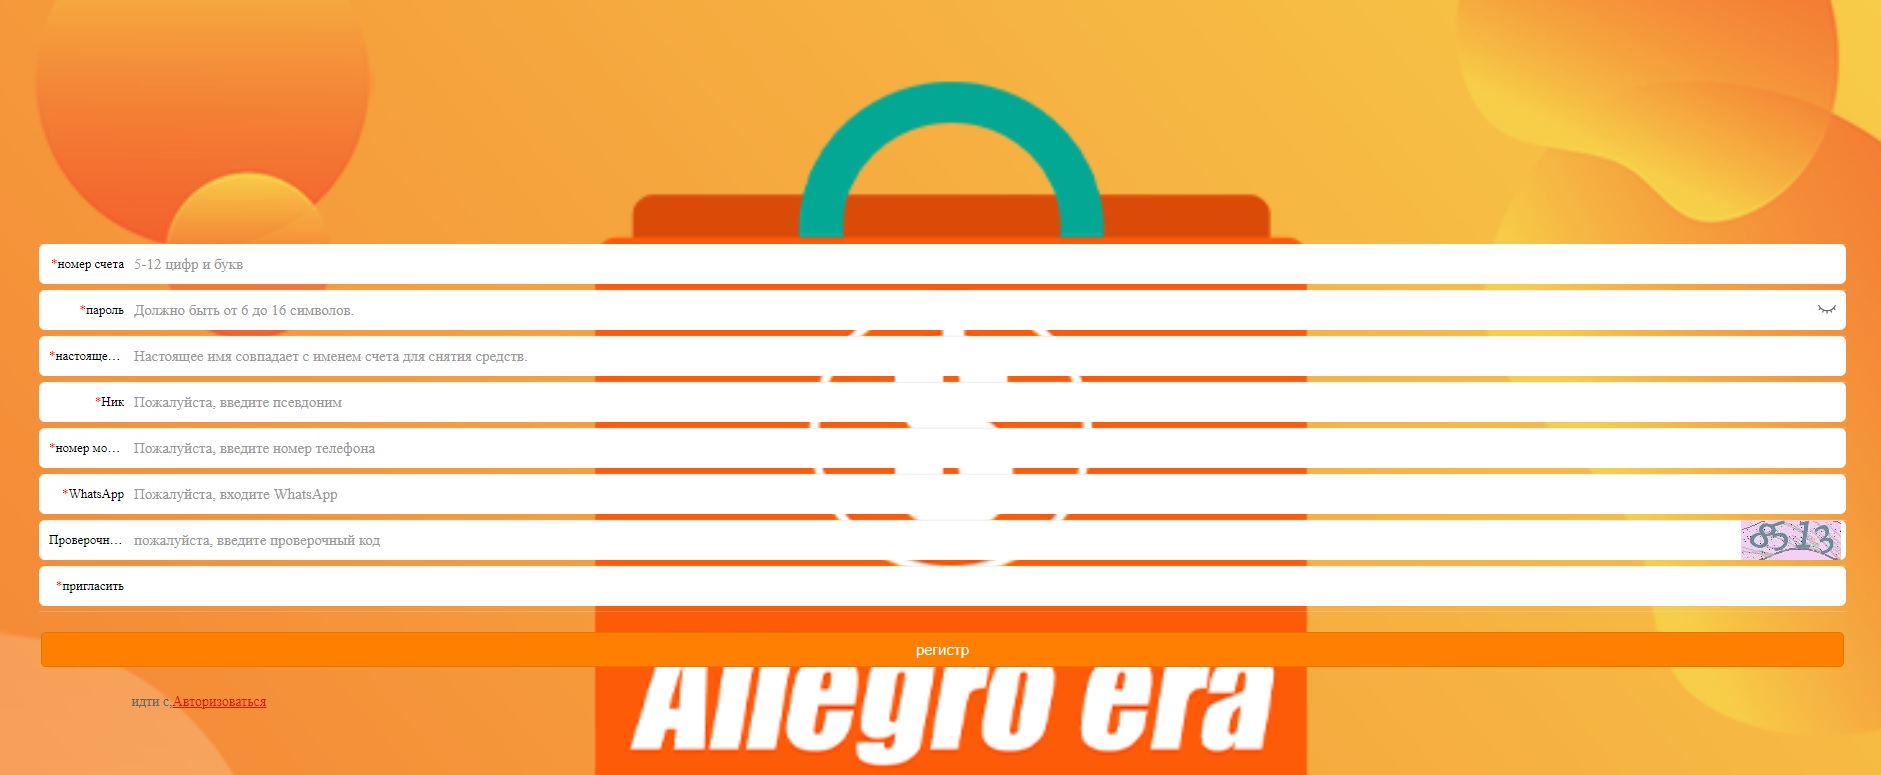 Allegro Era 